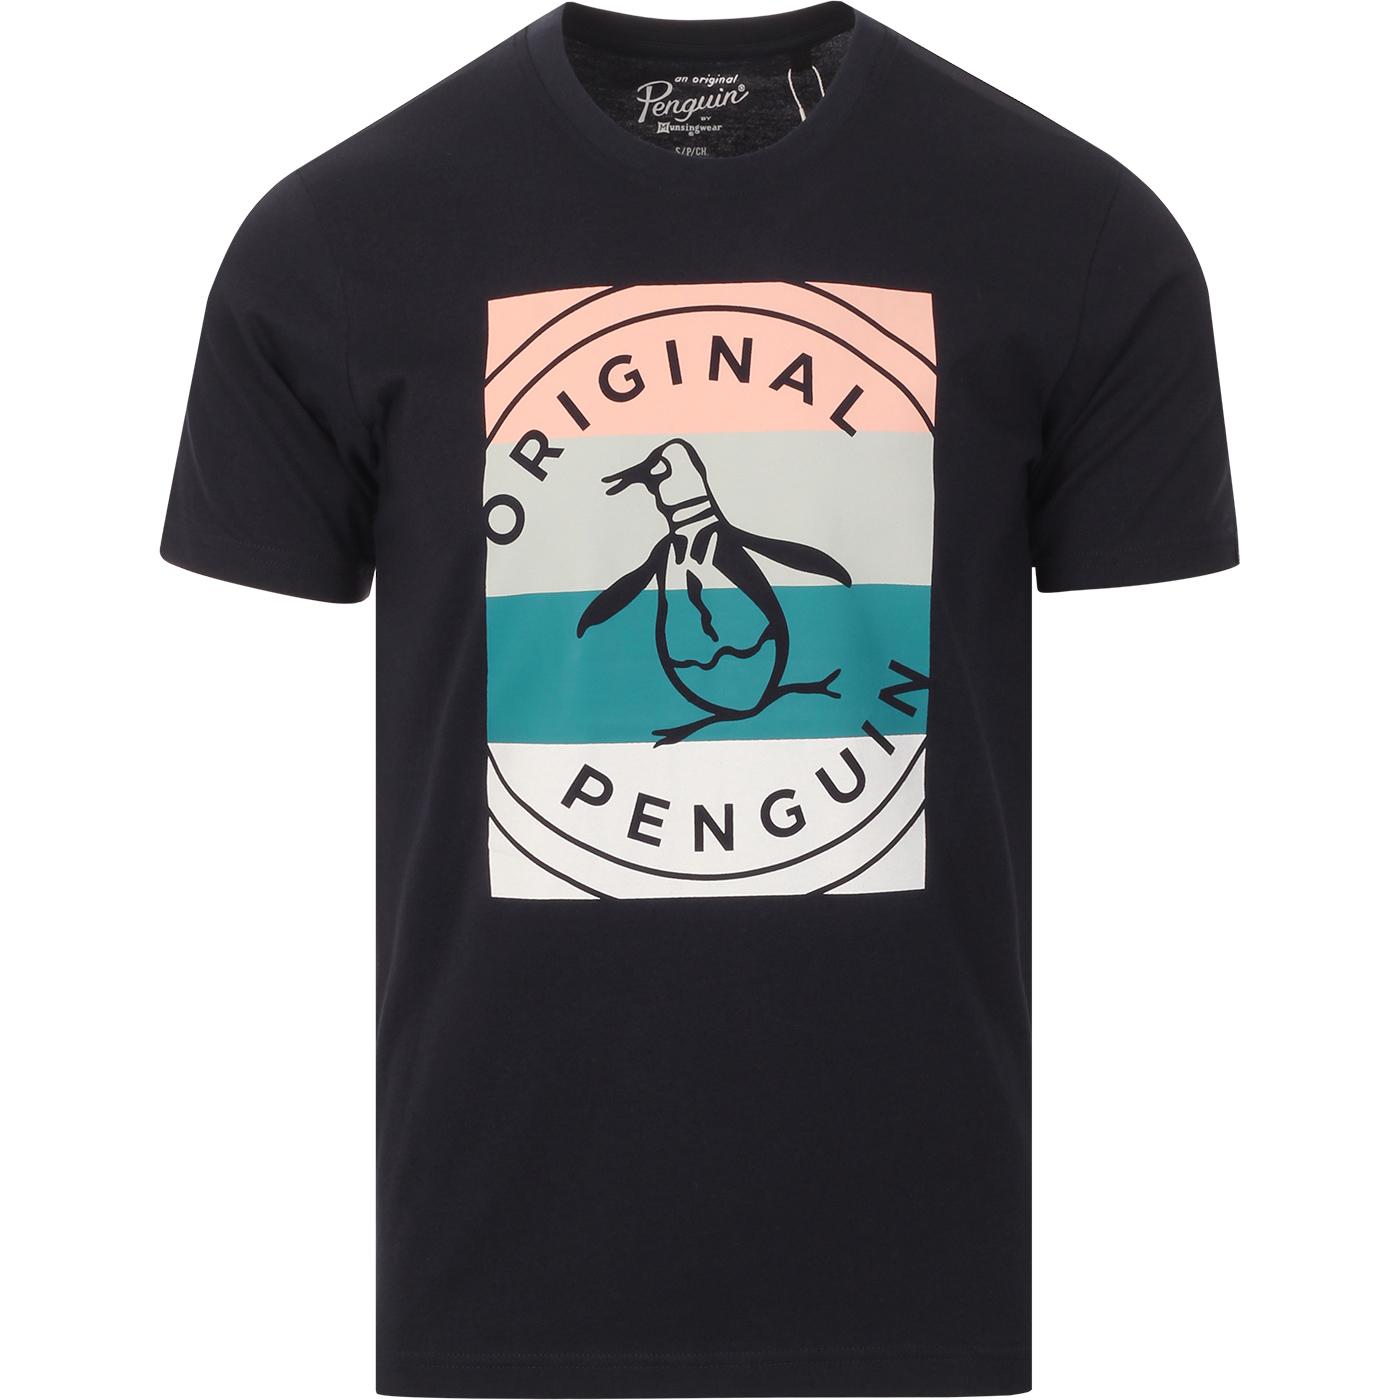 ORIGINAL PENGUIN Men's Stripy Box Logo T-Shirt